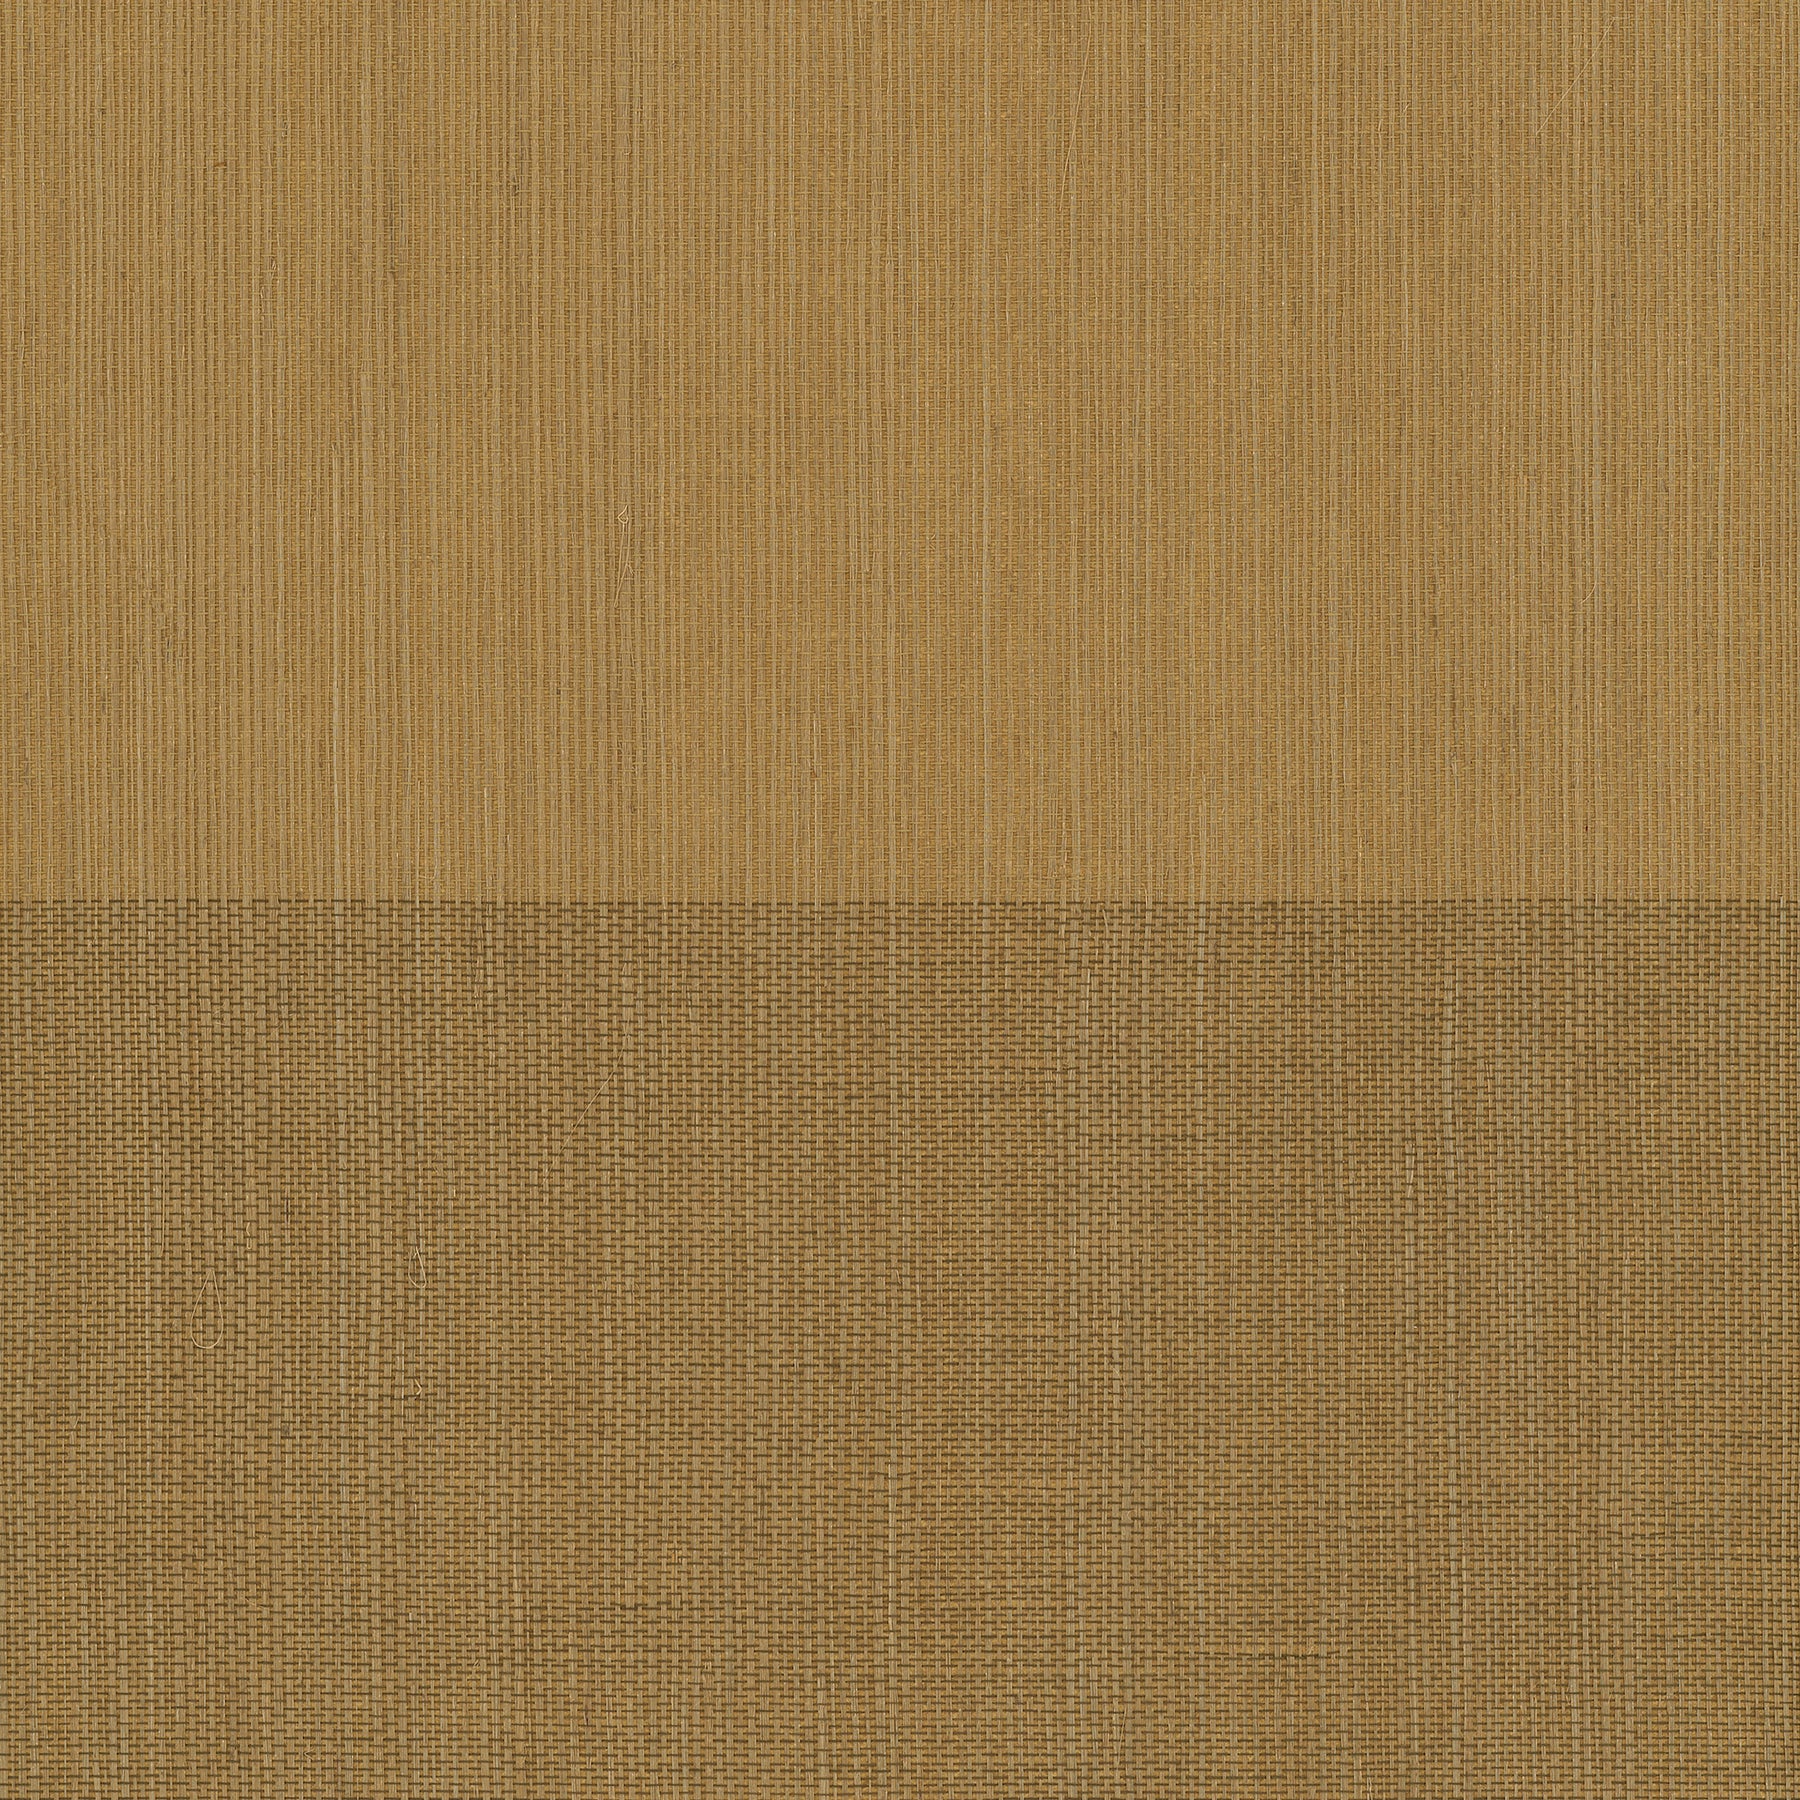 Order 4018-0027 Grasscloth Portfolio Yue Ying Light Brown Grasscloth Brown by Advantage